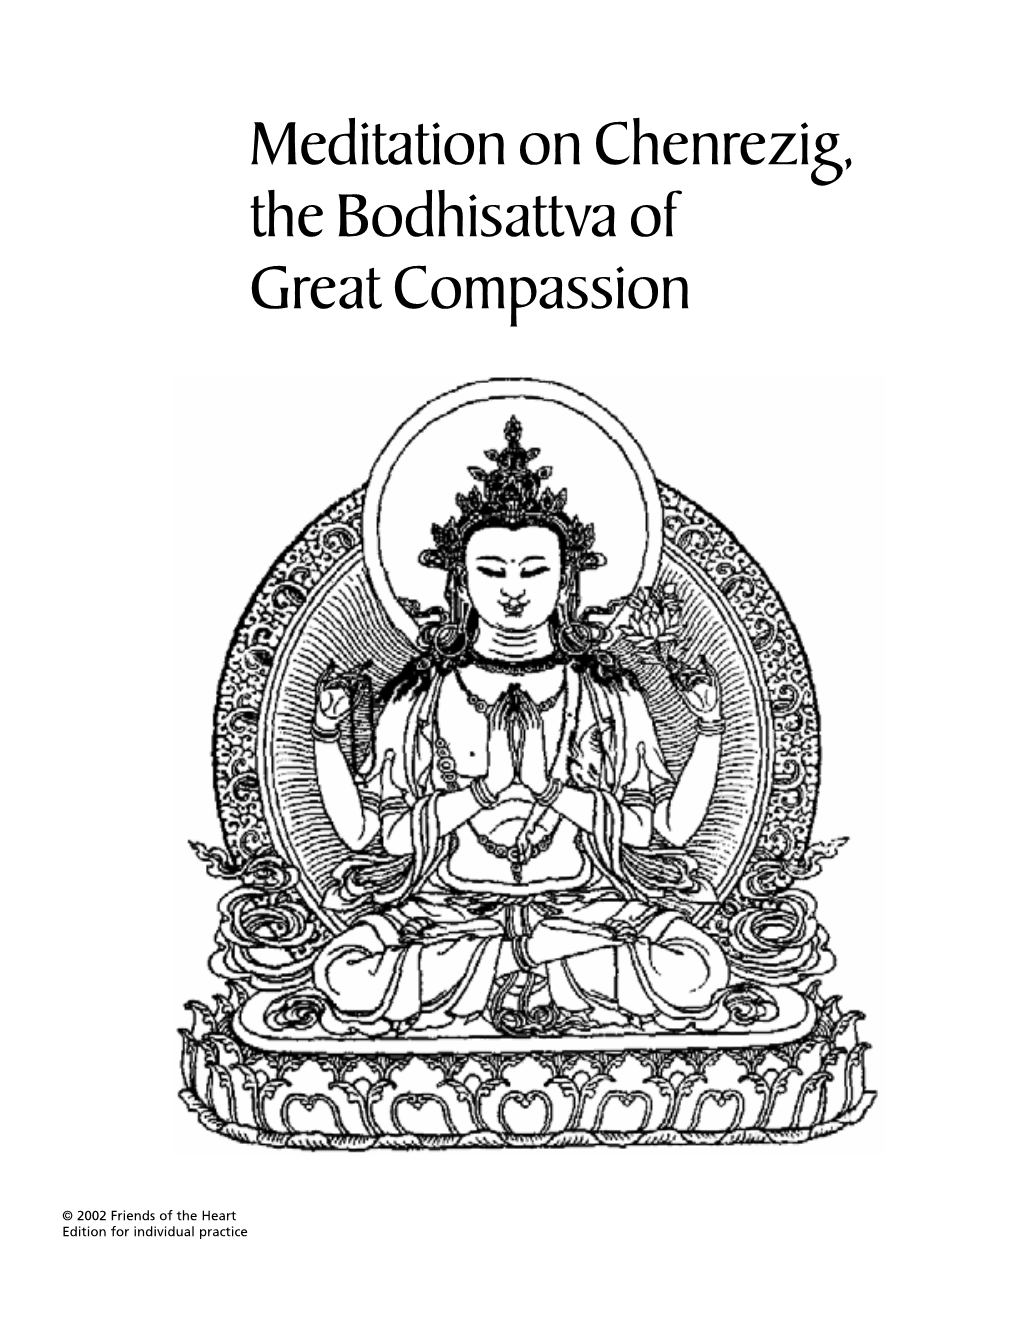 Meditation on Chenrezig, the Bodhisattva of Great Compassion